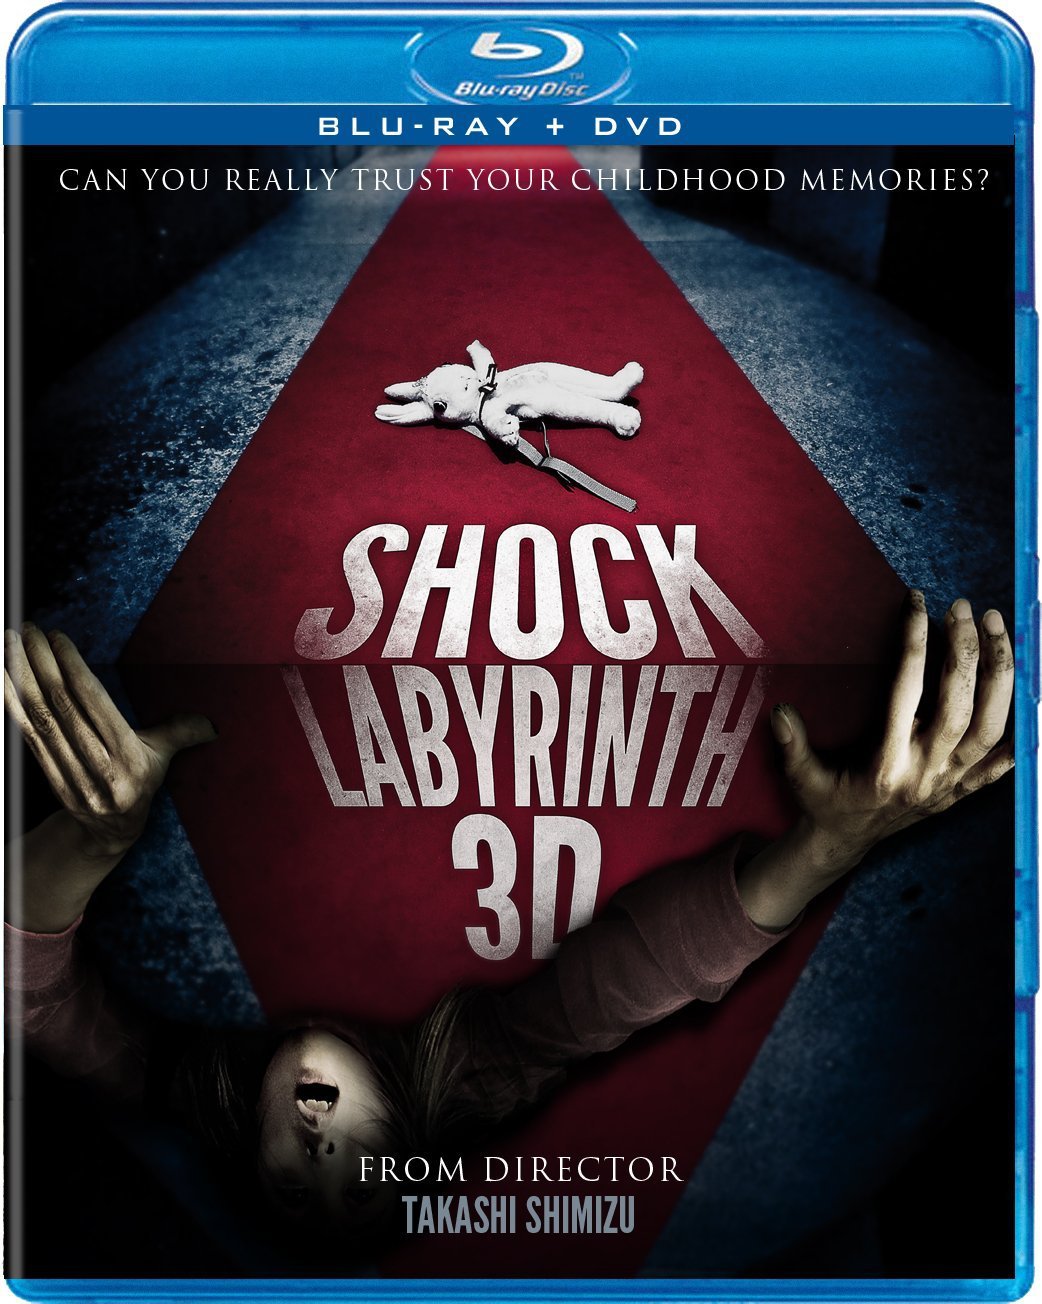 Shock Labyrinth 3D